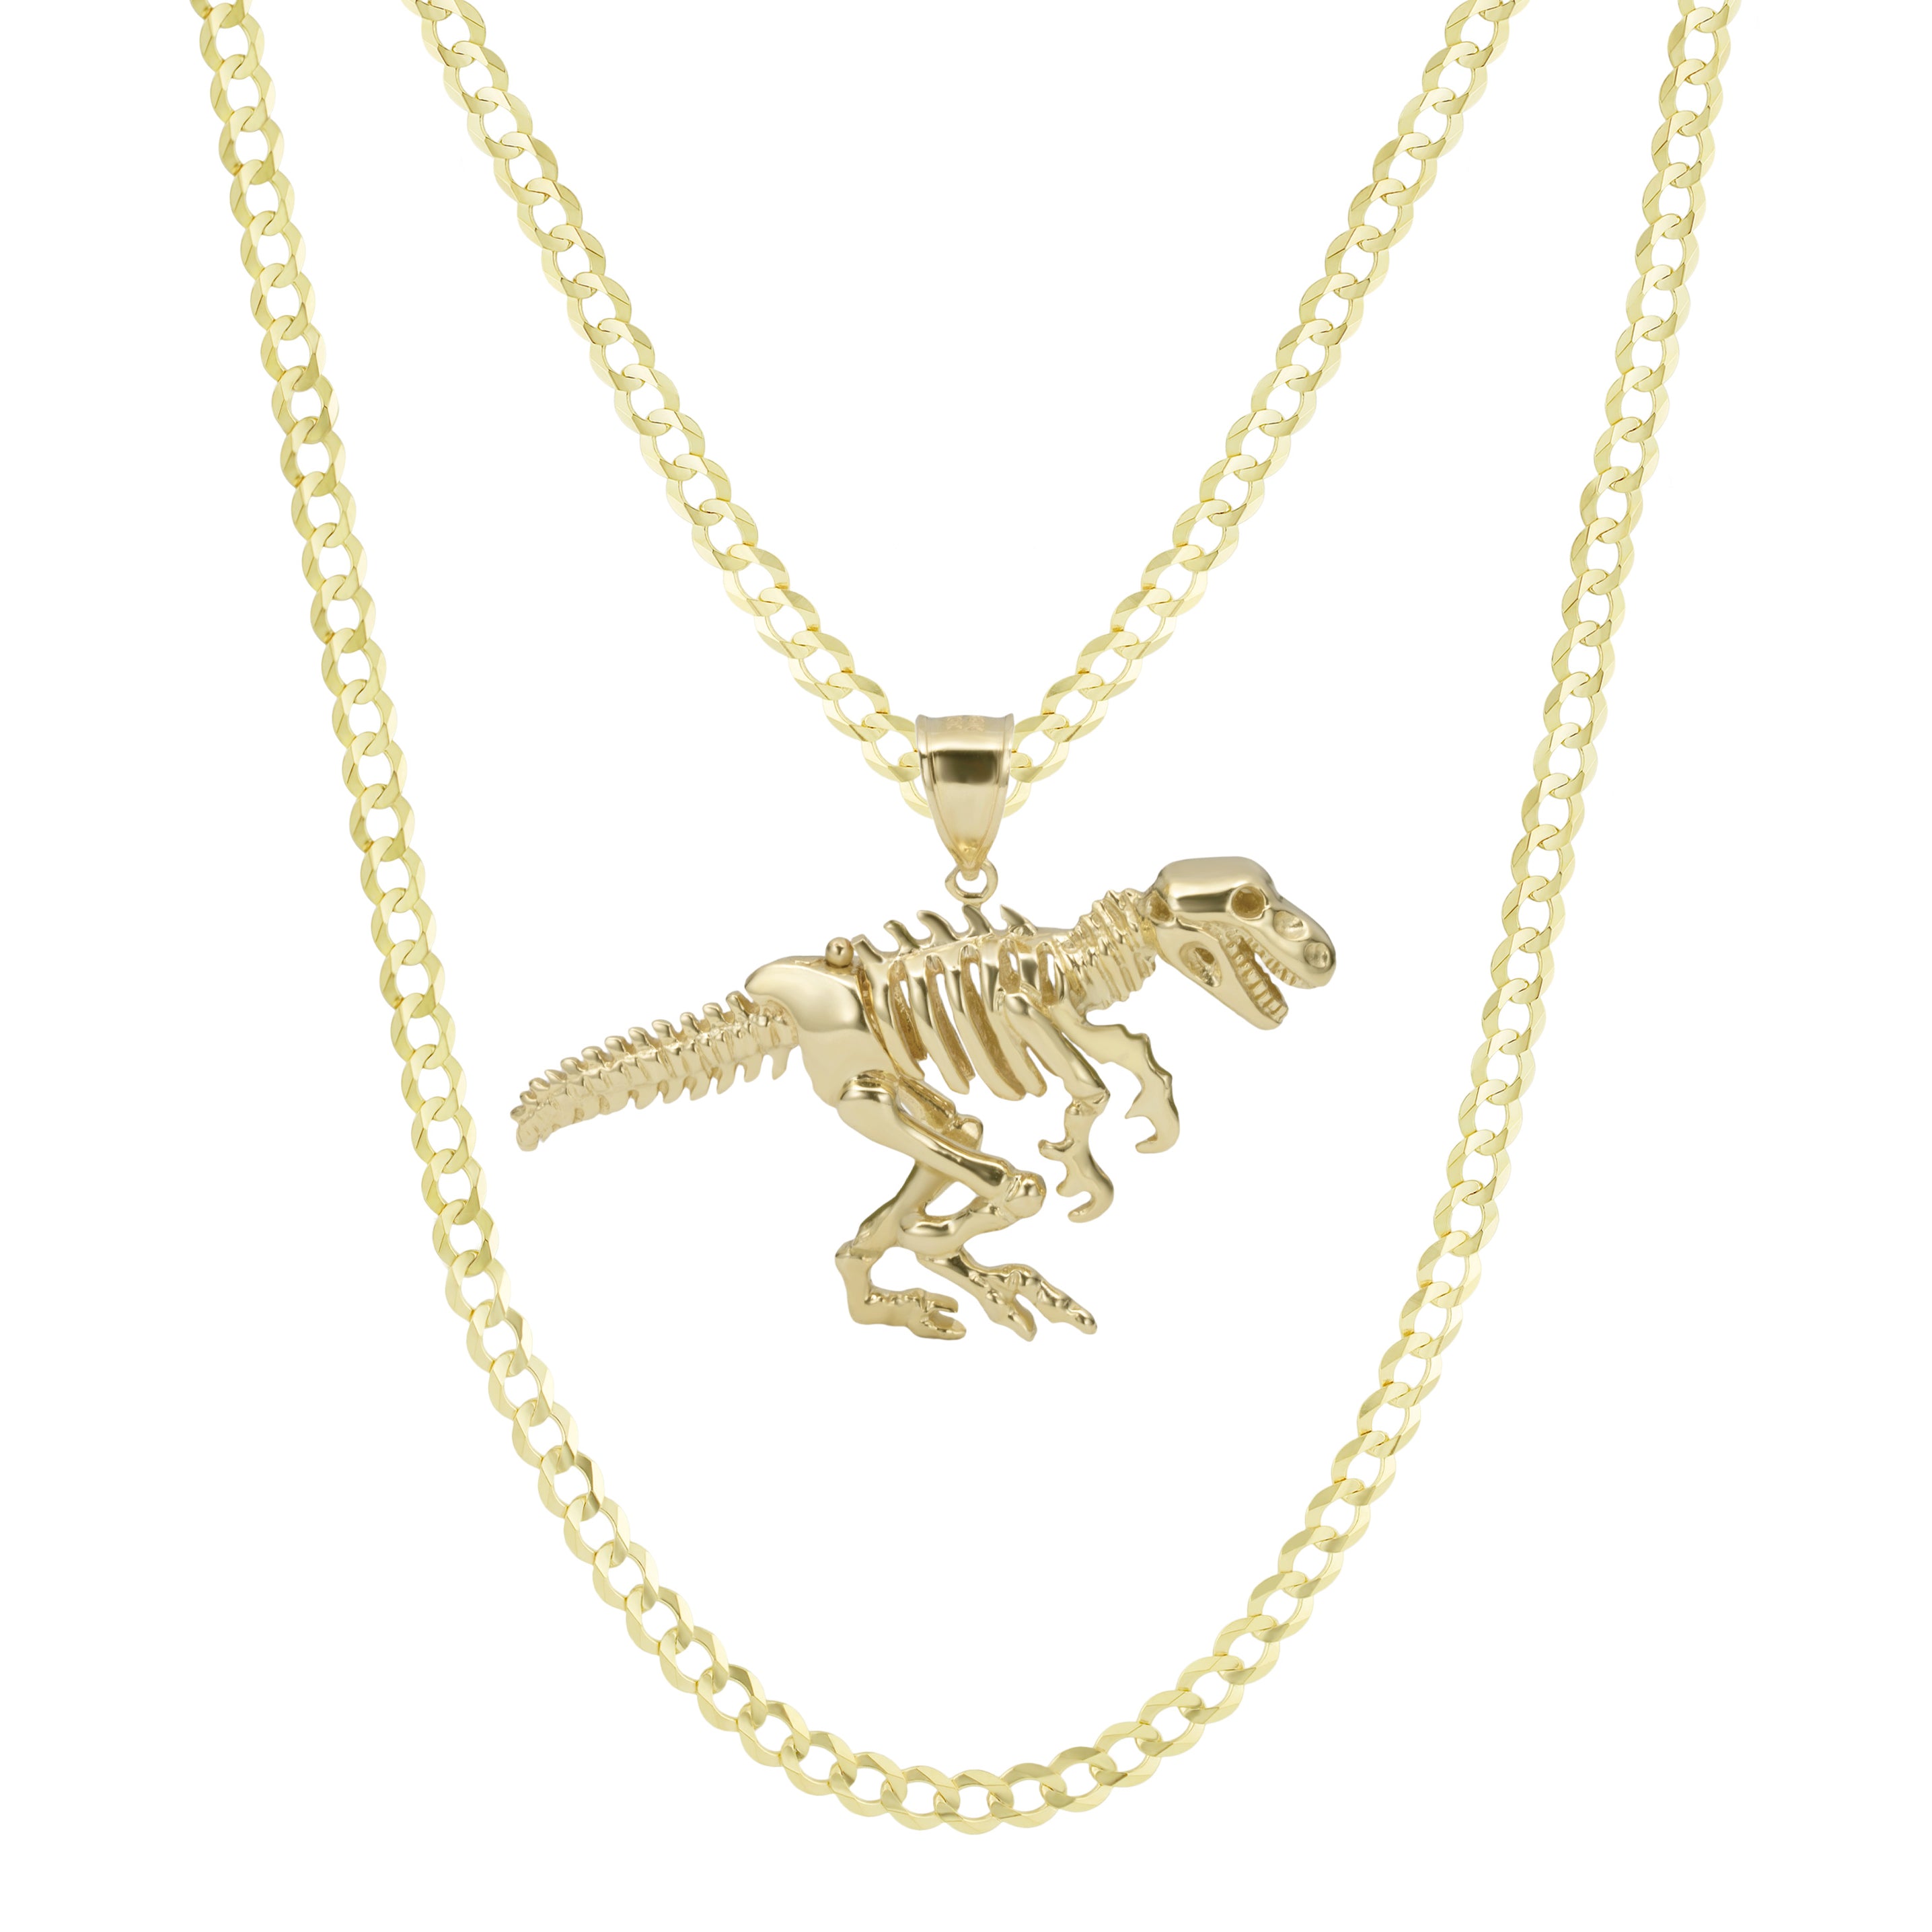 Buy Tiny Solid Gold Velicoraptor Dinosaur Necklace / Raptor Pendant / Gift  for Boys, Girls Online in India - Etsy